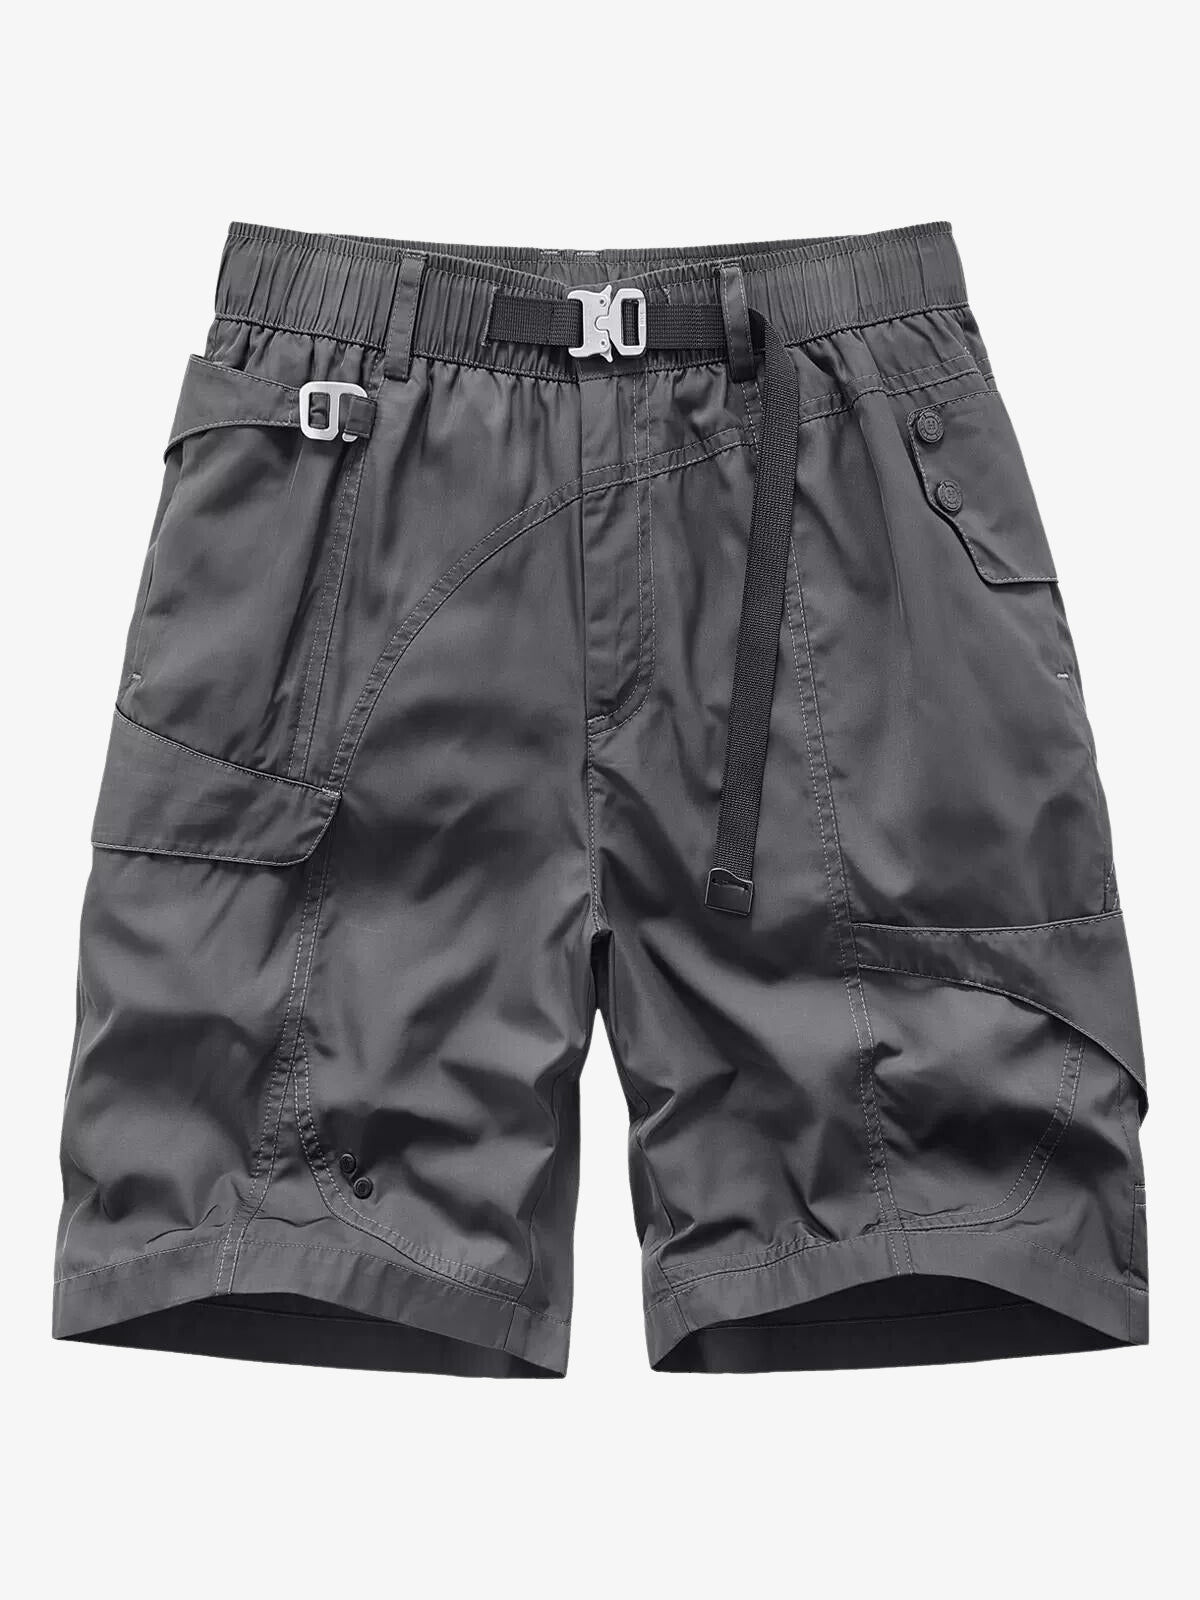 Metal Buckle Multi Zip Pockets Shorts